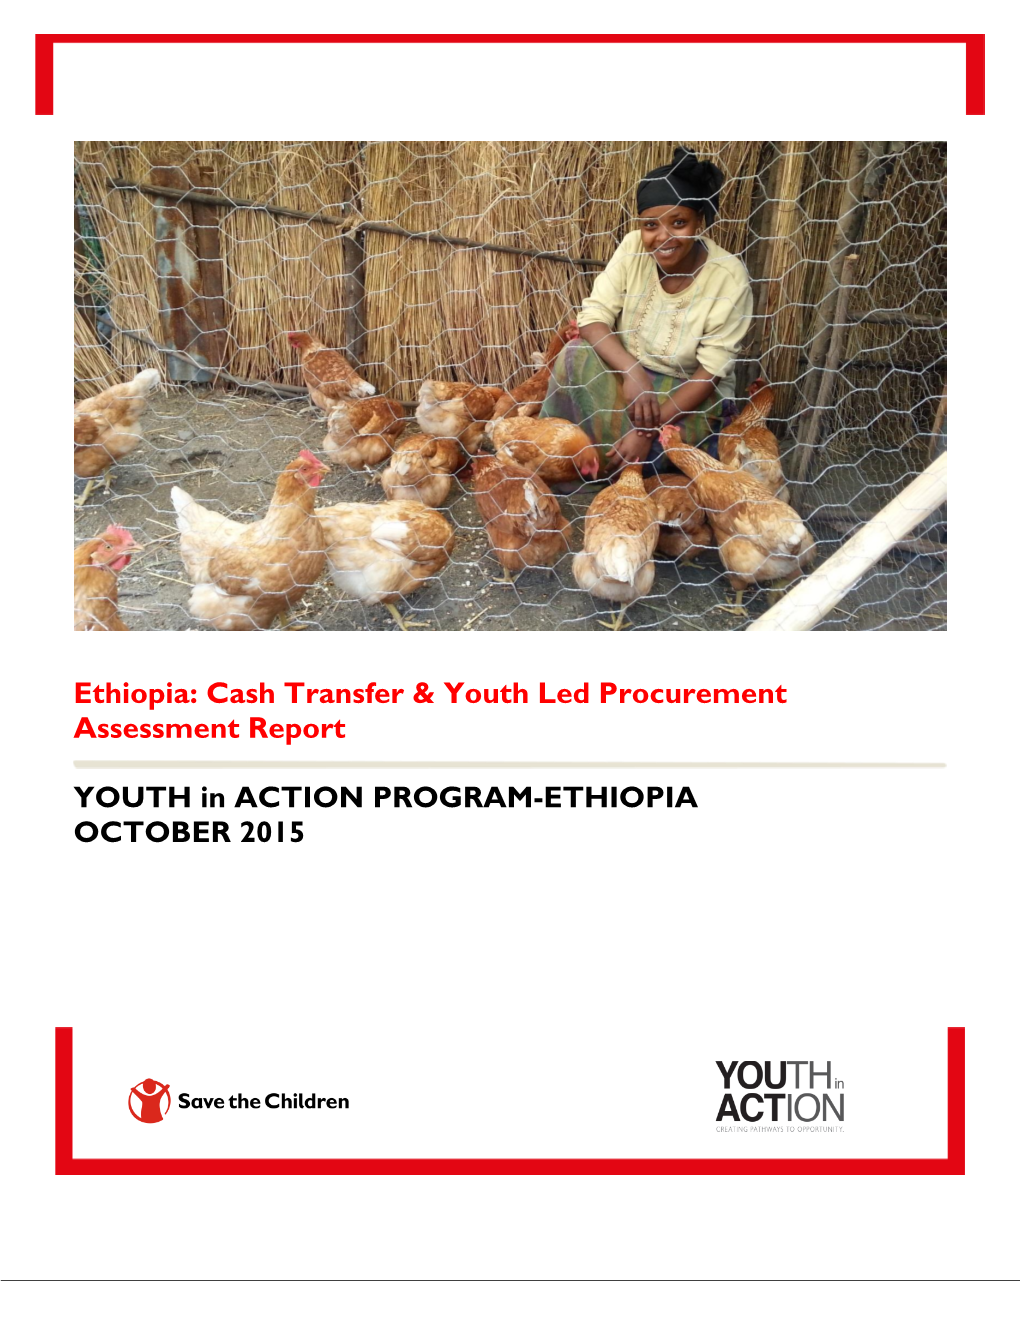 Ethiopia: Cash Transfer & Youth Led Procurement Assessment Report